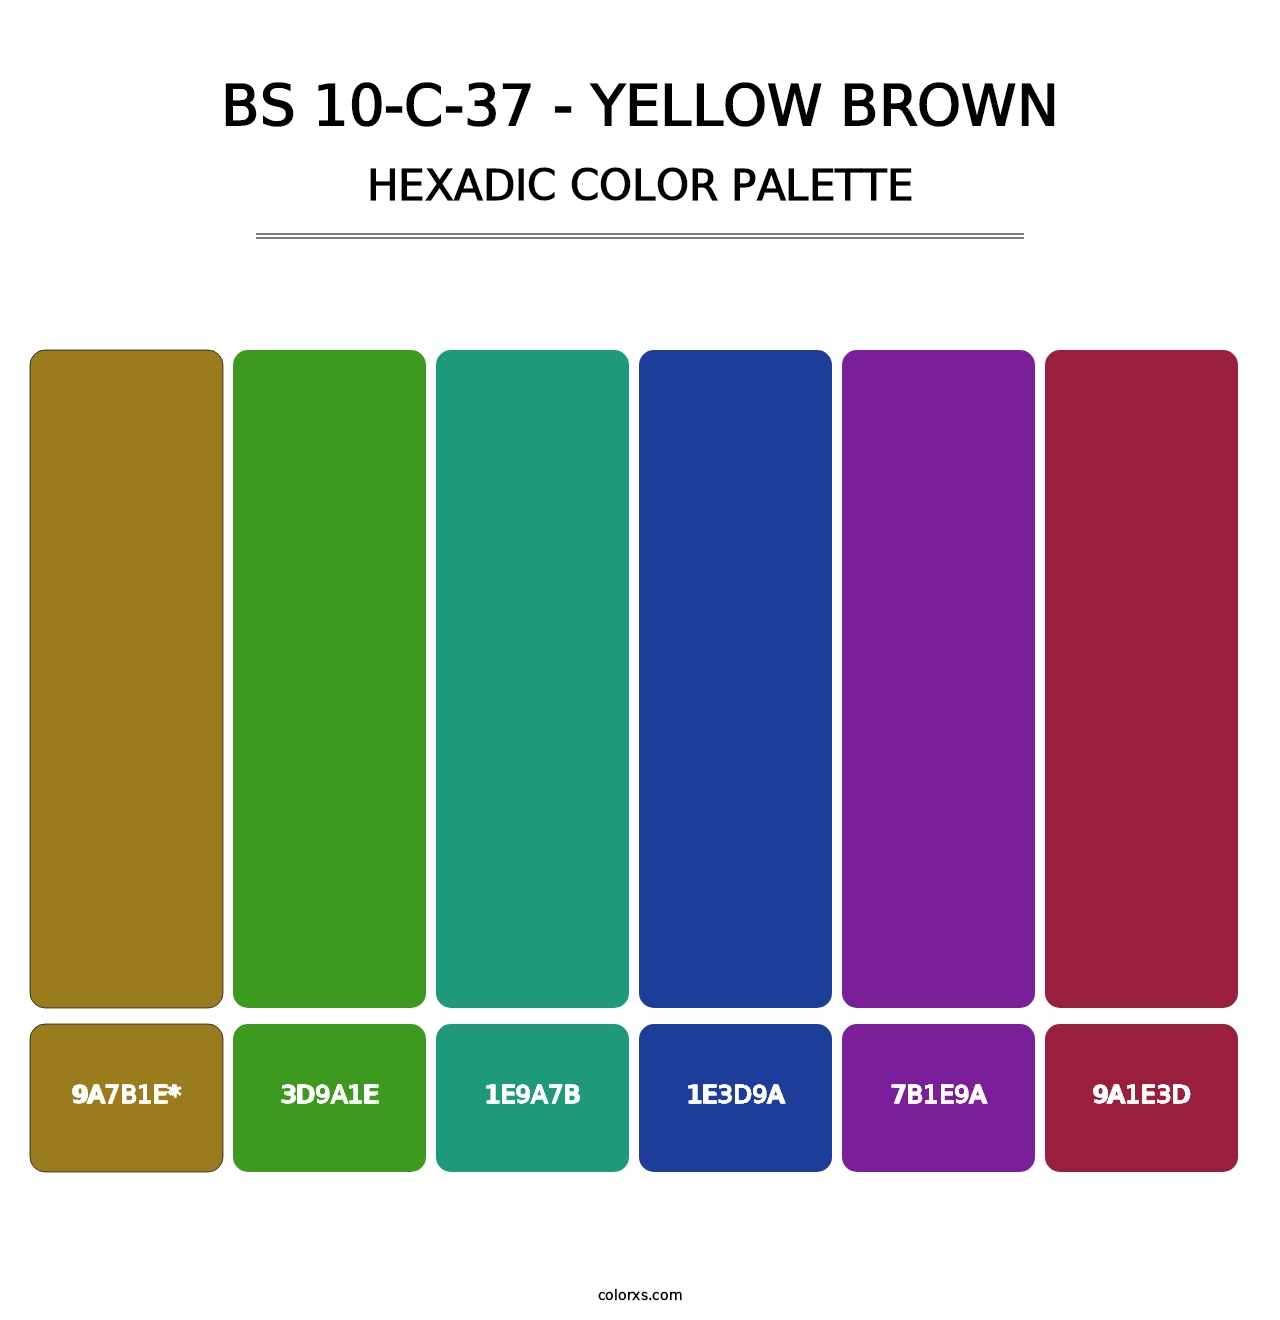 BS 10-C-37 - Yellow Brown - Hexadic Color Palette